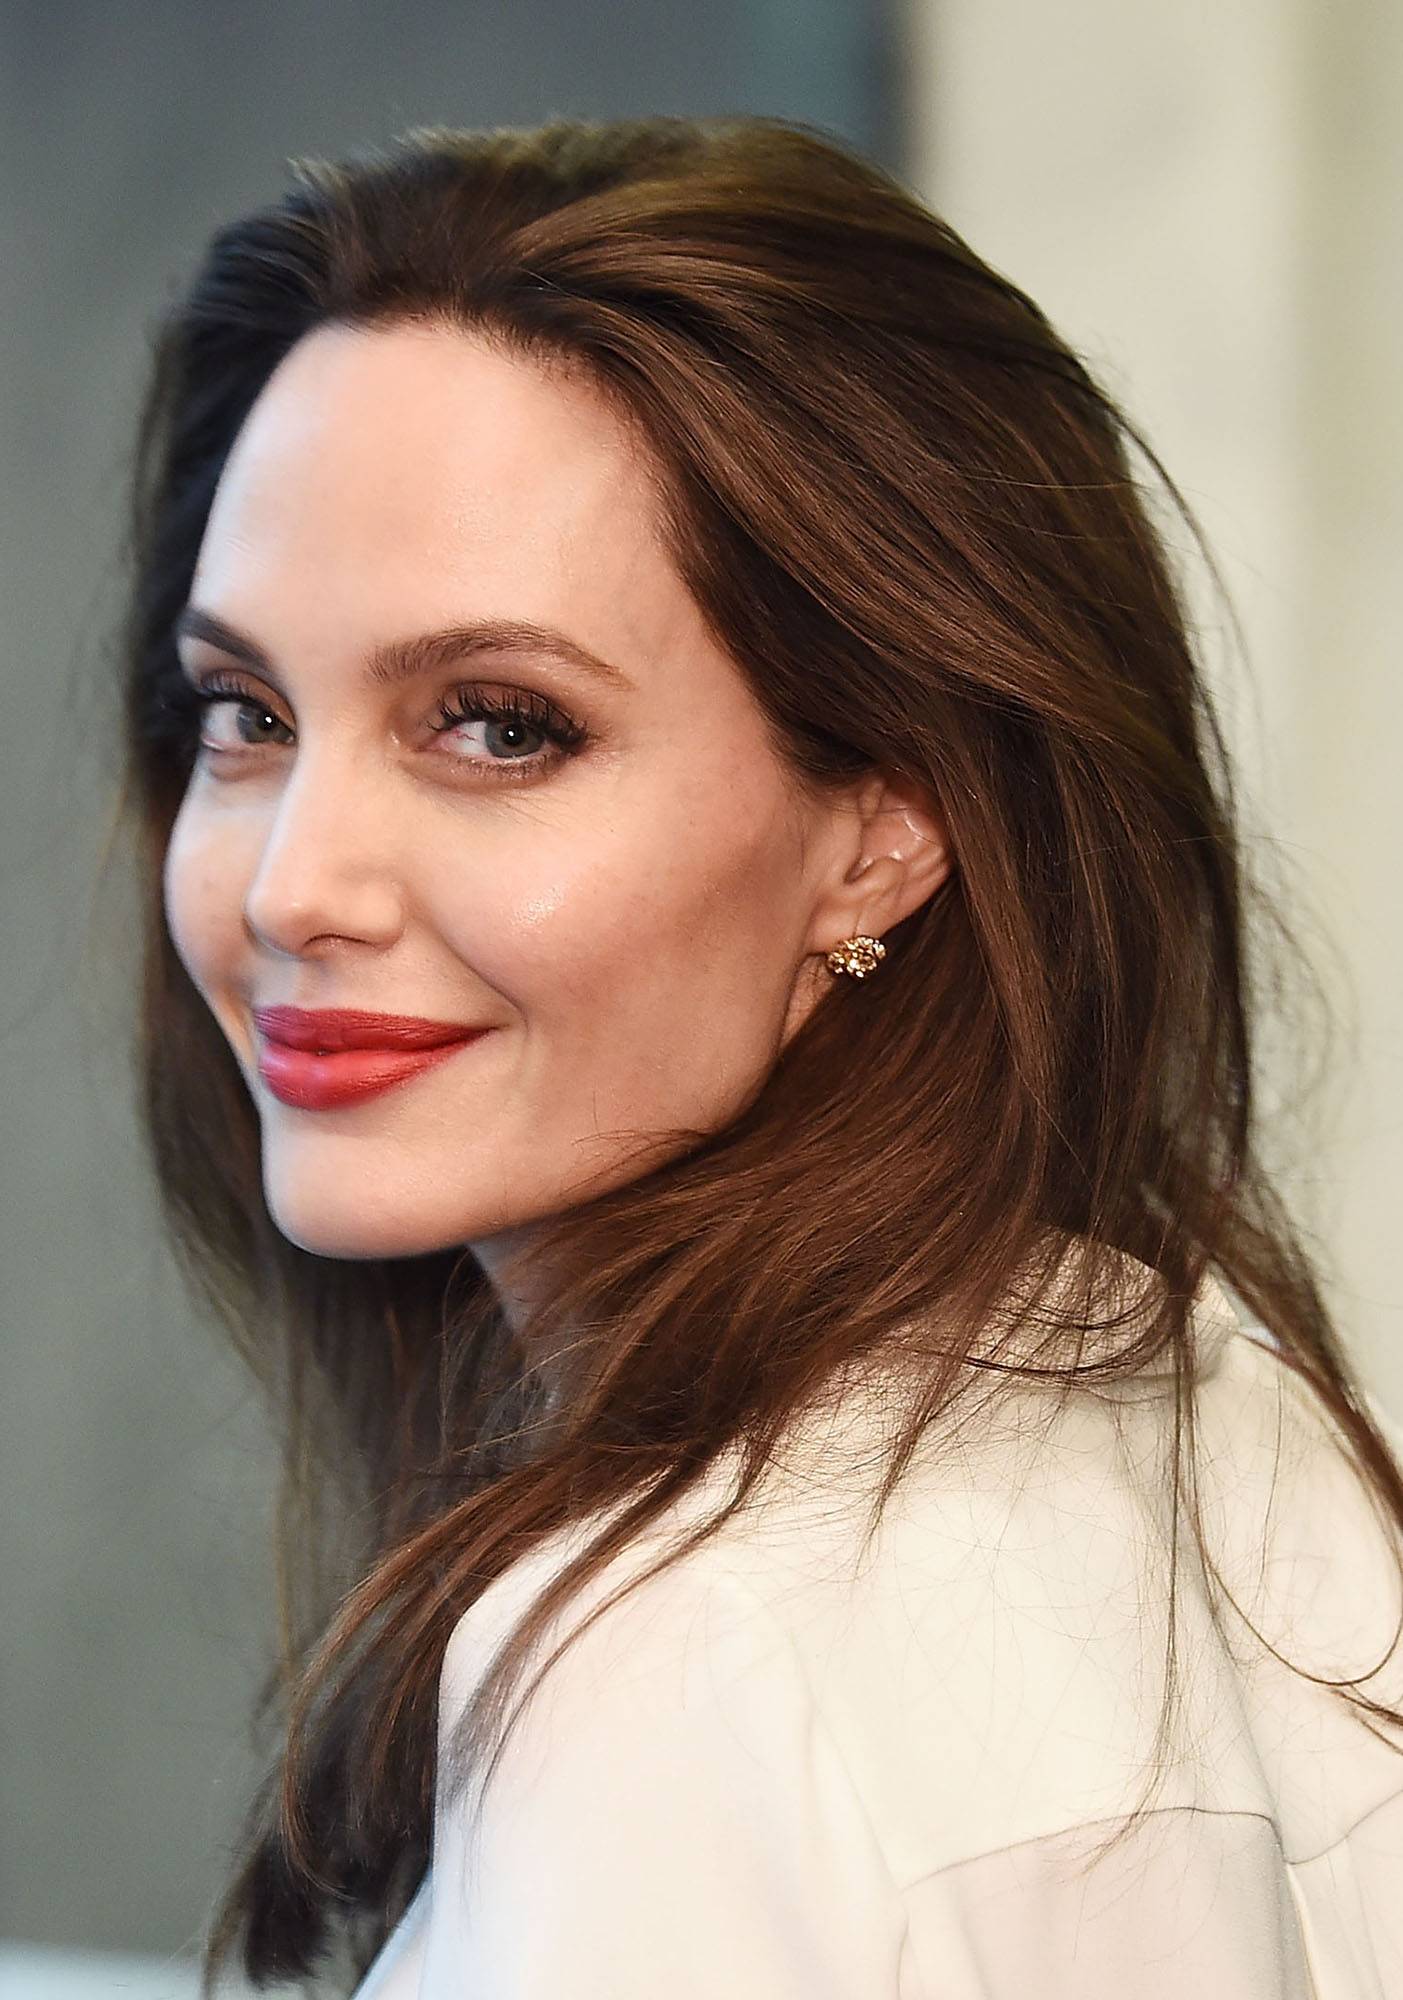 Marka Angeliny Jolie Atelier Jolie podejmuje współpracę z Chloe / Getty Images